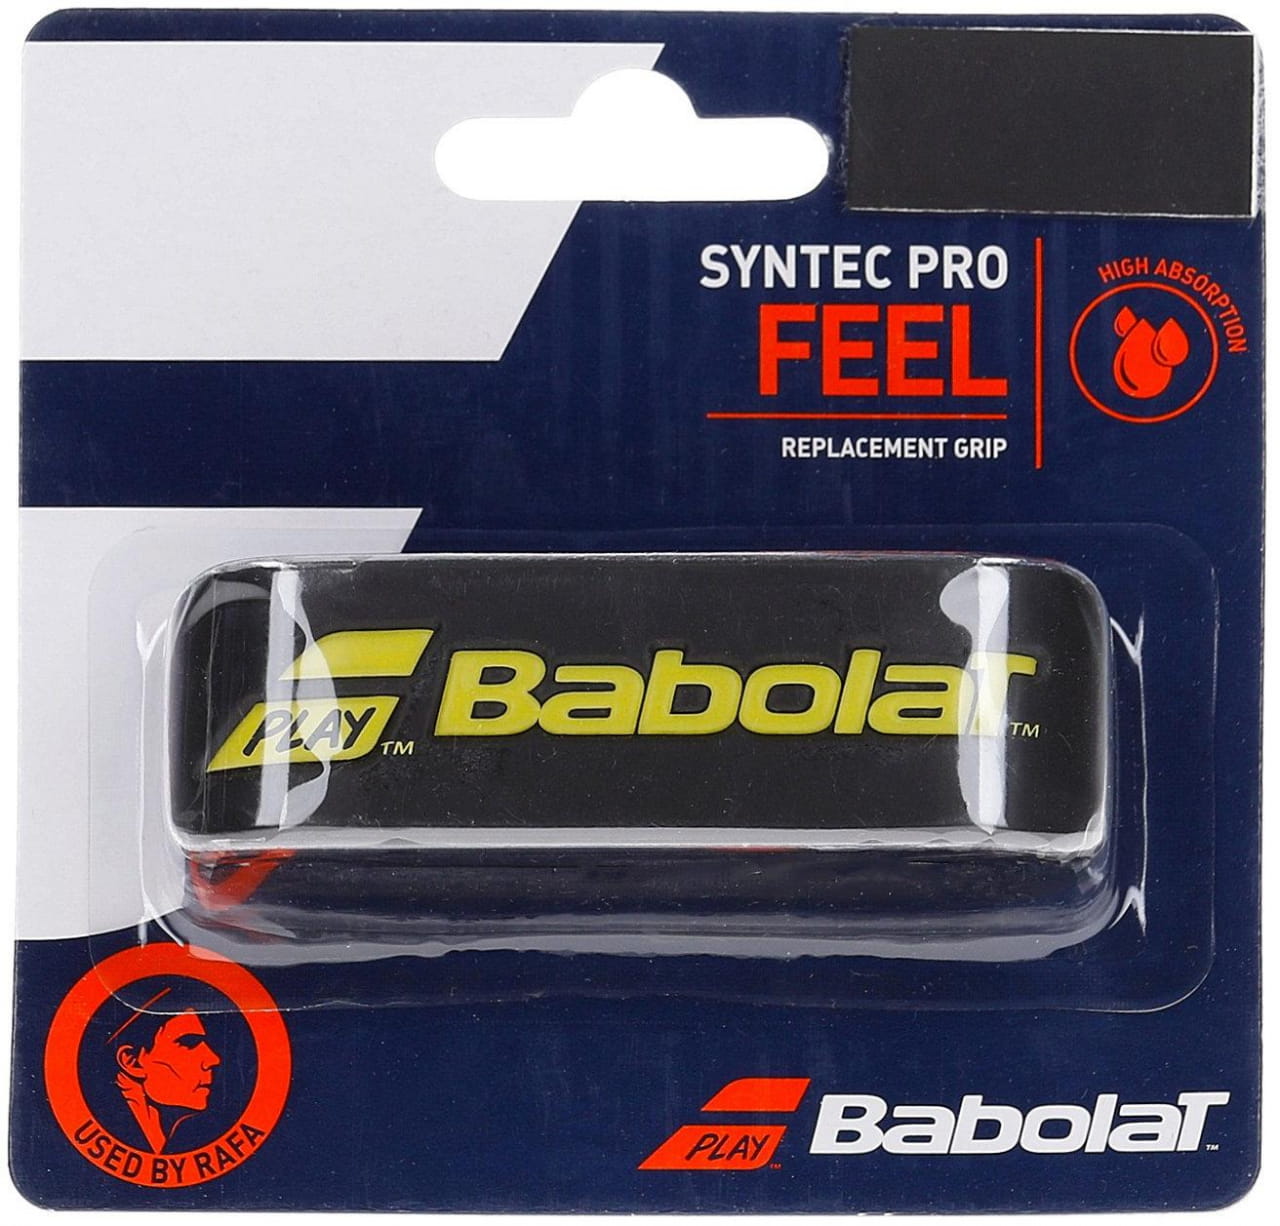 Akcesoria do tenisa Babolat Syntec Pro